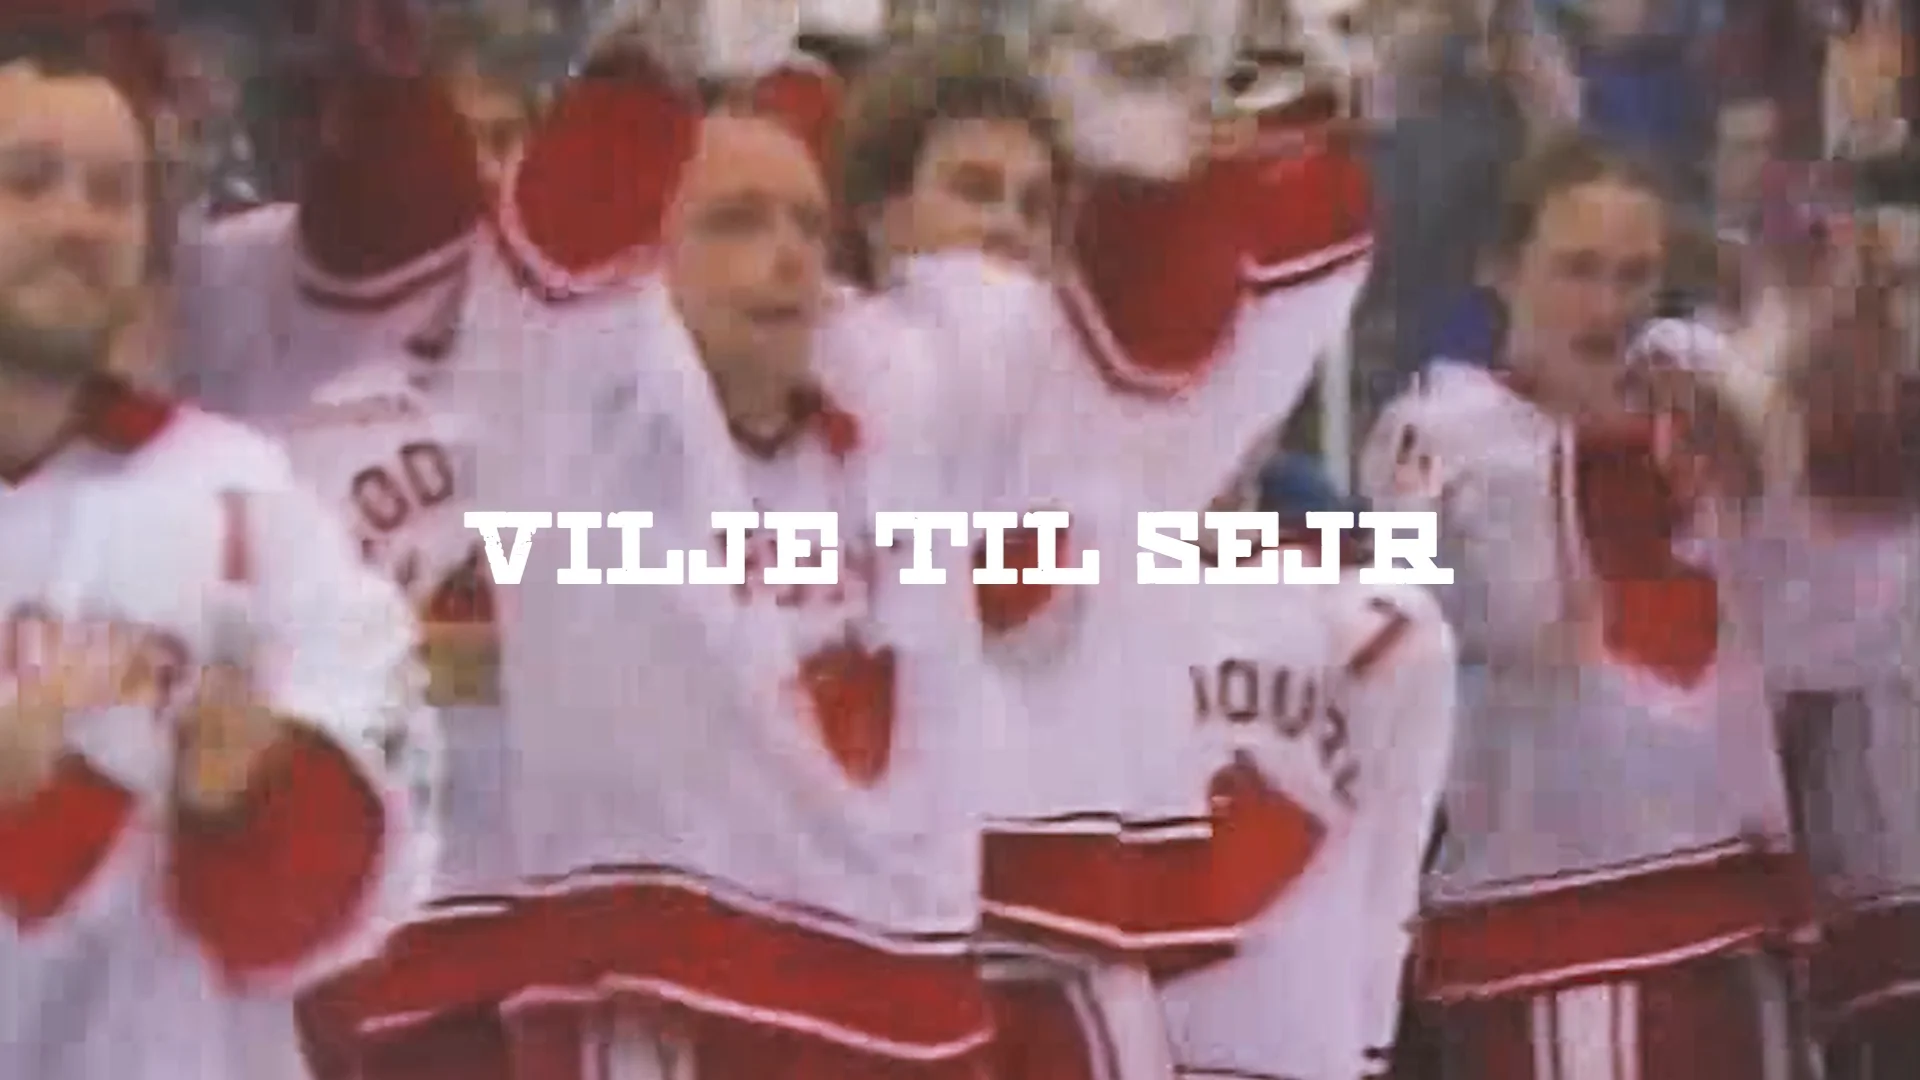 Ishockey - Mighty Bulls on Vimeo